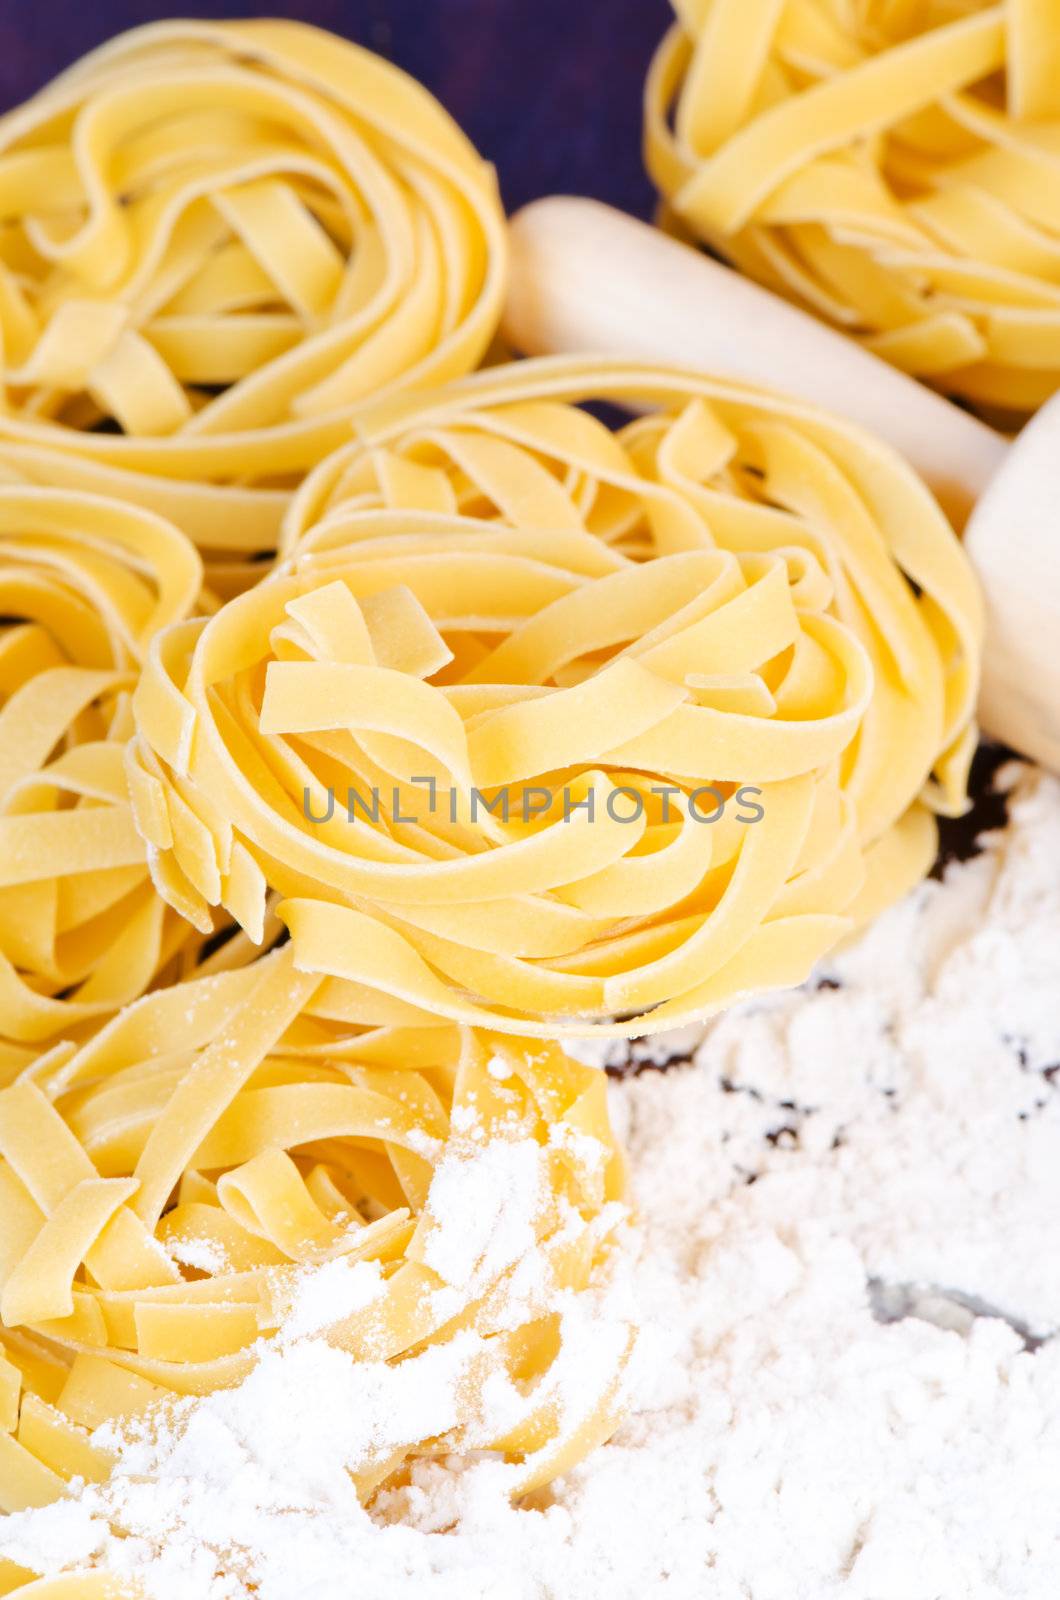 Cooking Italian pasta by Nanisimova